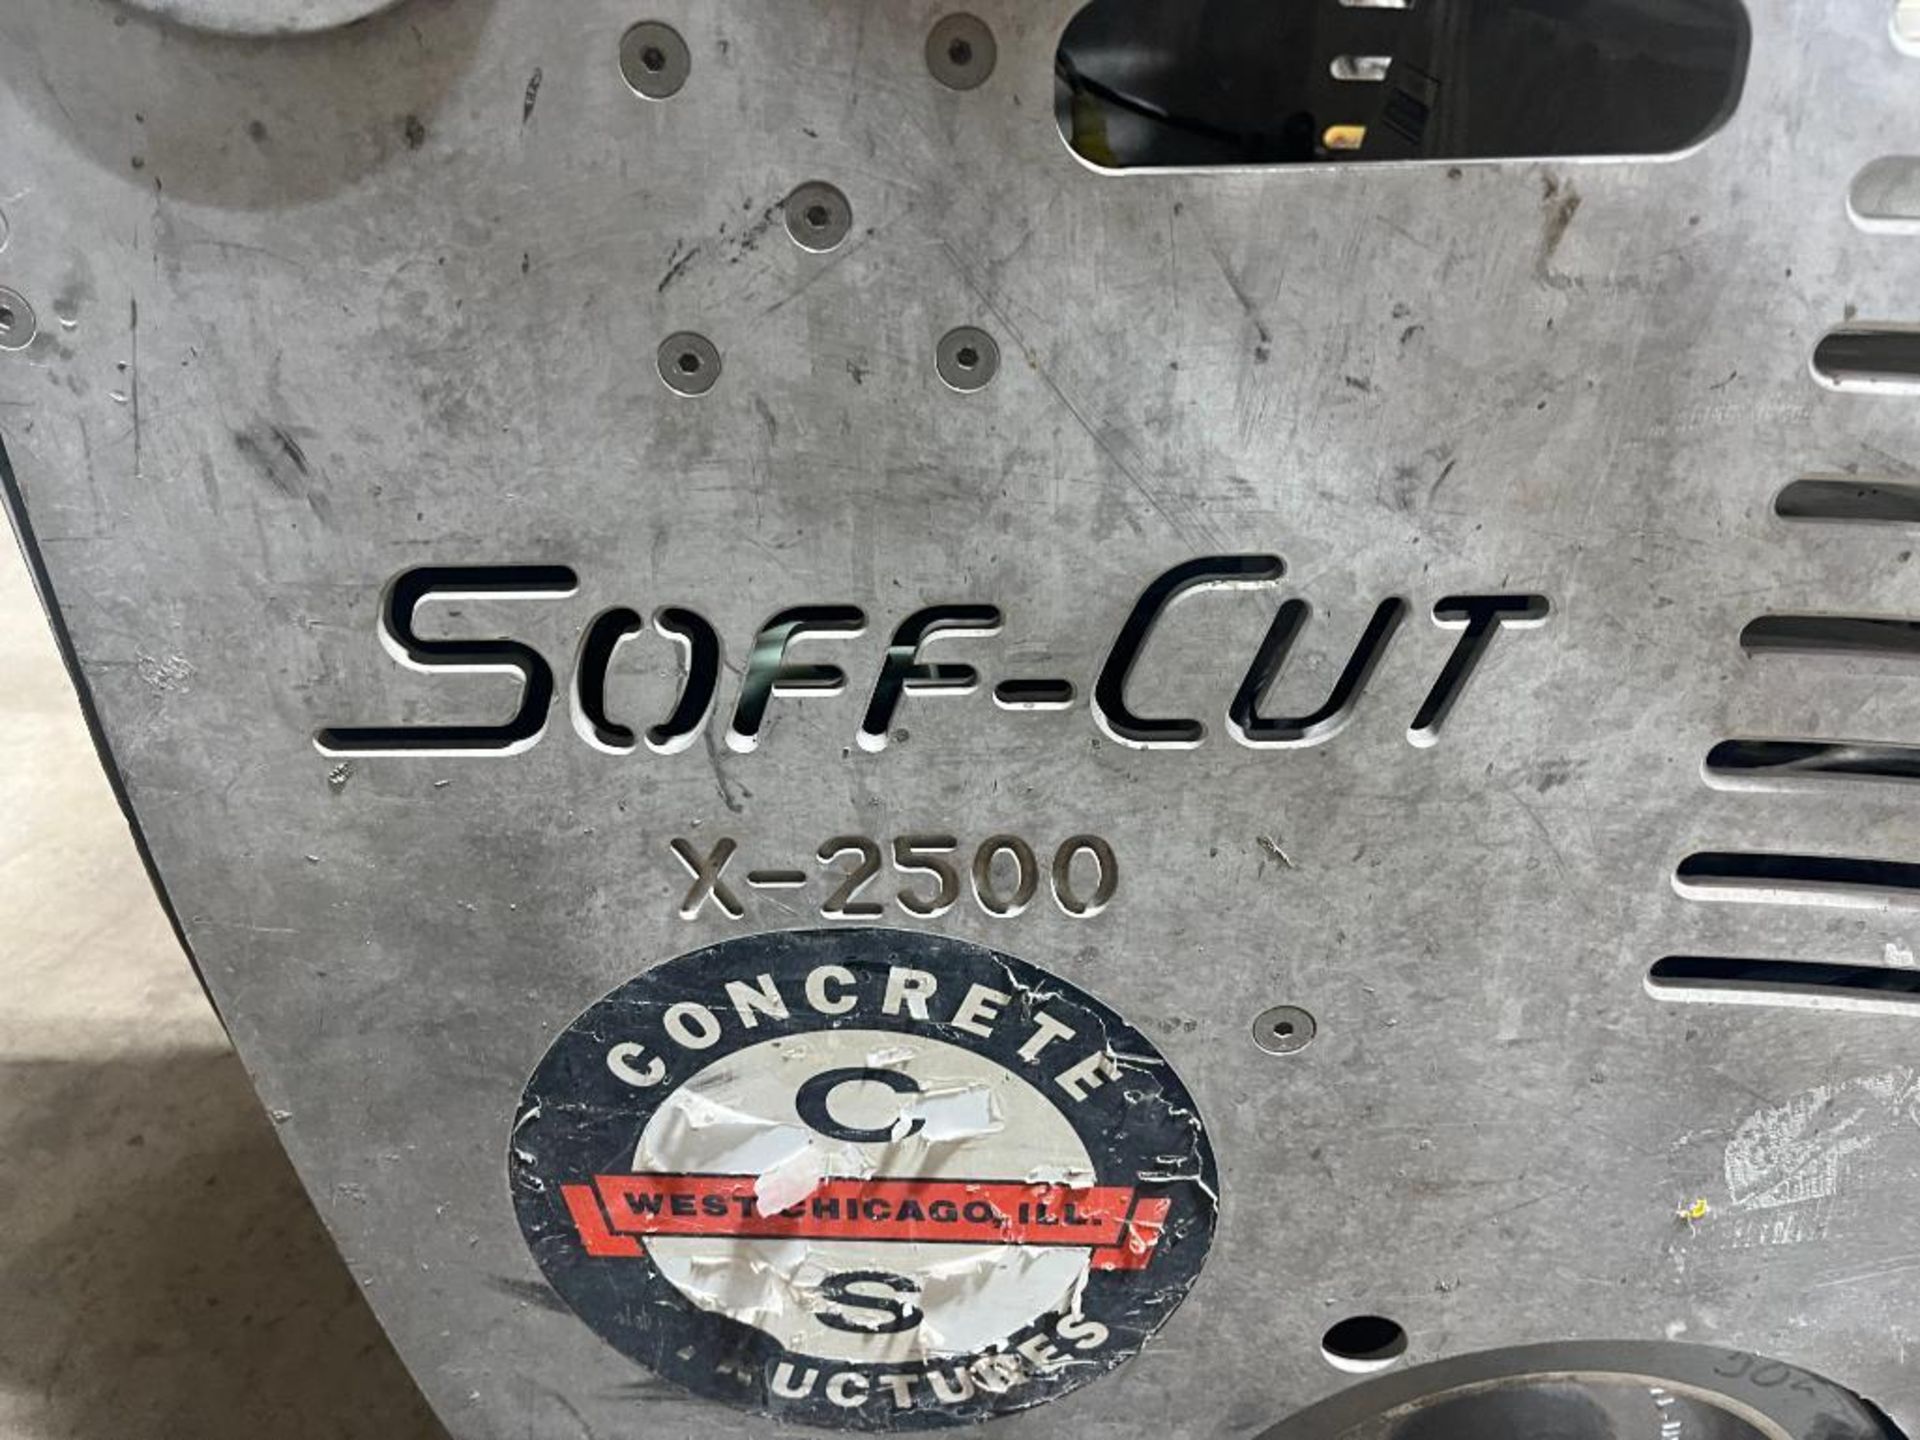 Husqvarna Soff-Cut X-2500 Concrete Saw (Delayed Removal) - Image 6 of 6